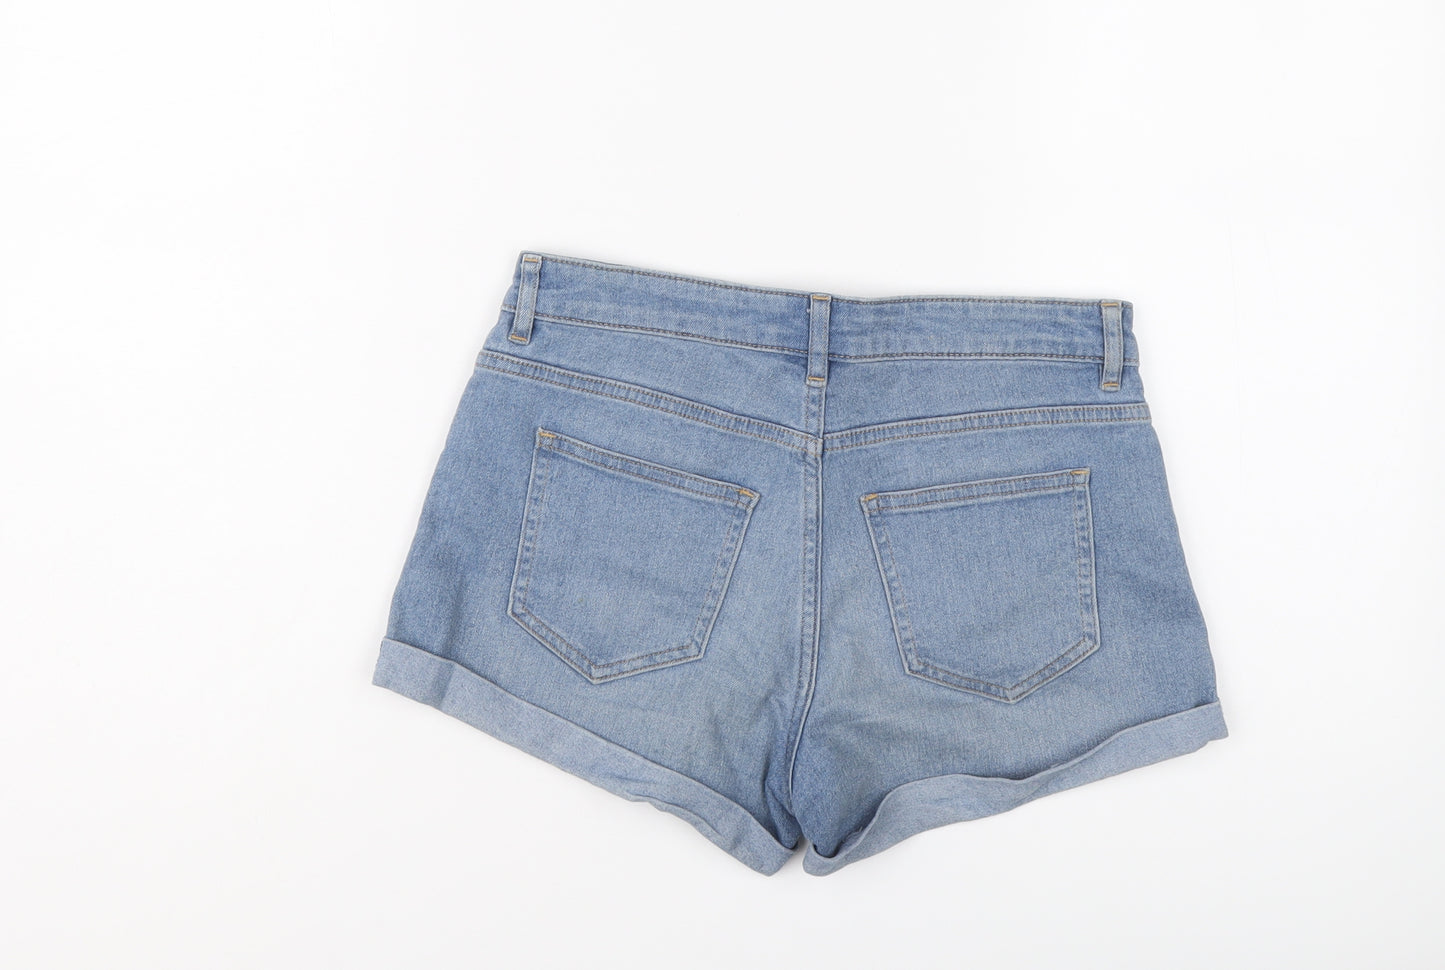 H&M Womens Blue Cotton Hot Pants Shorts Size 6 L3 in Regular Button